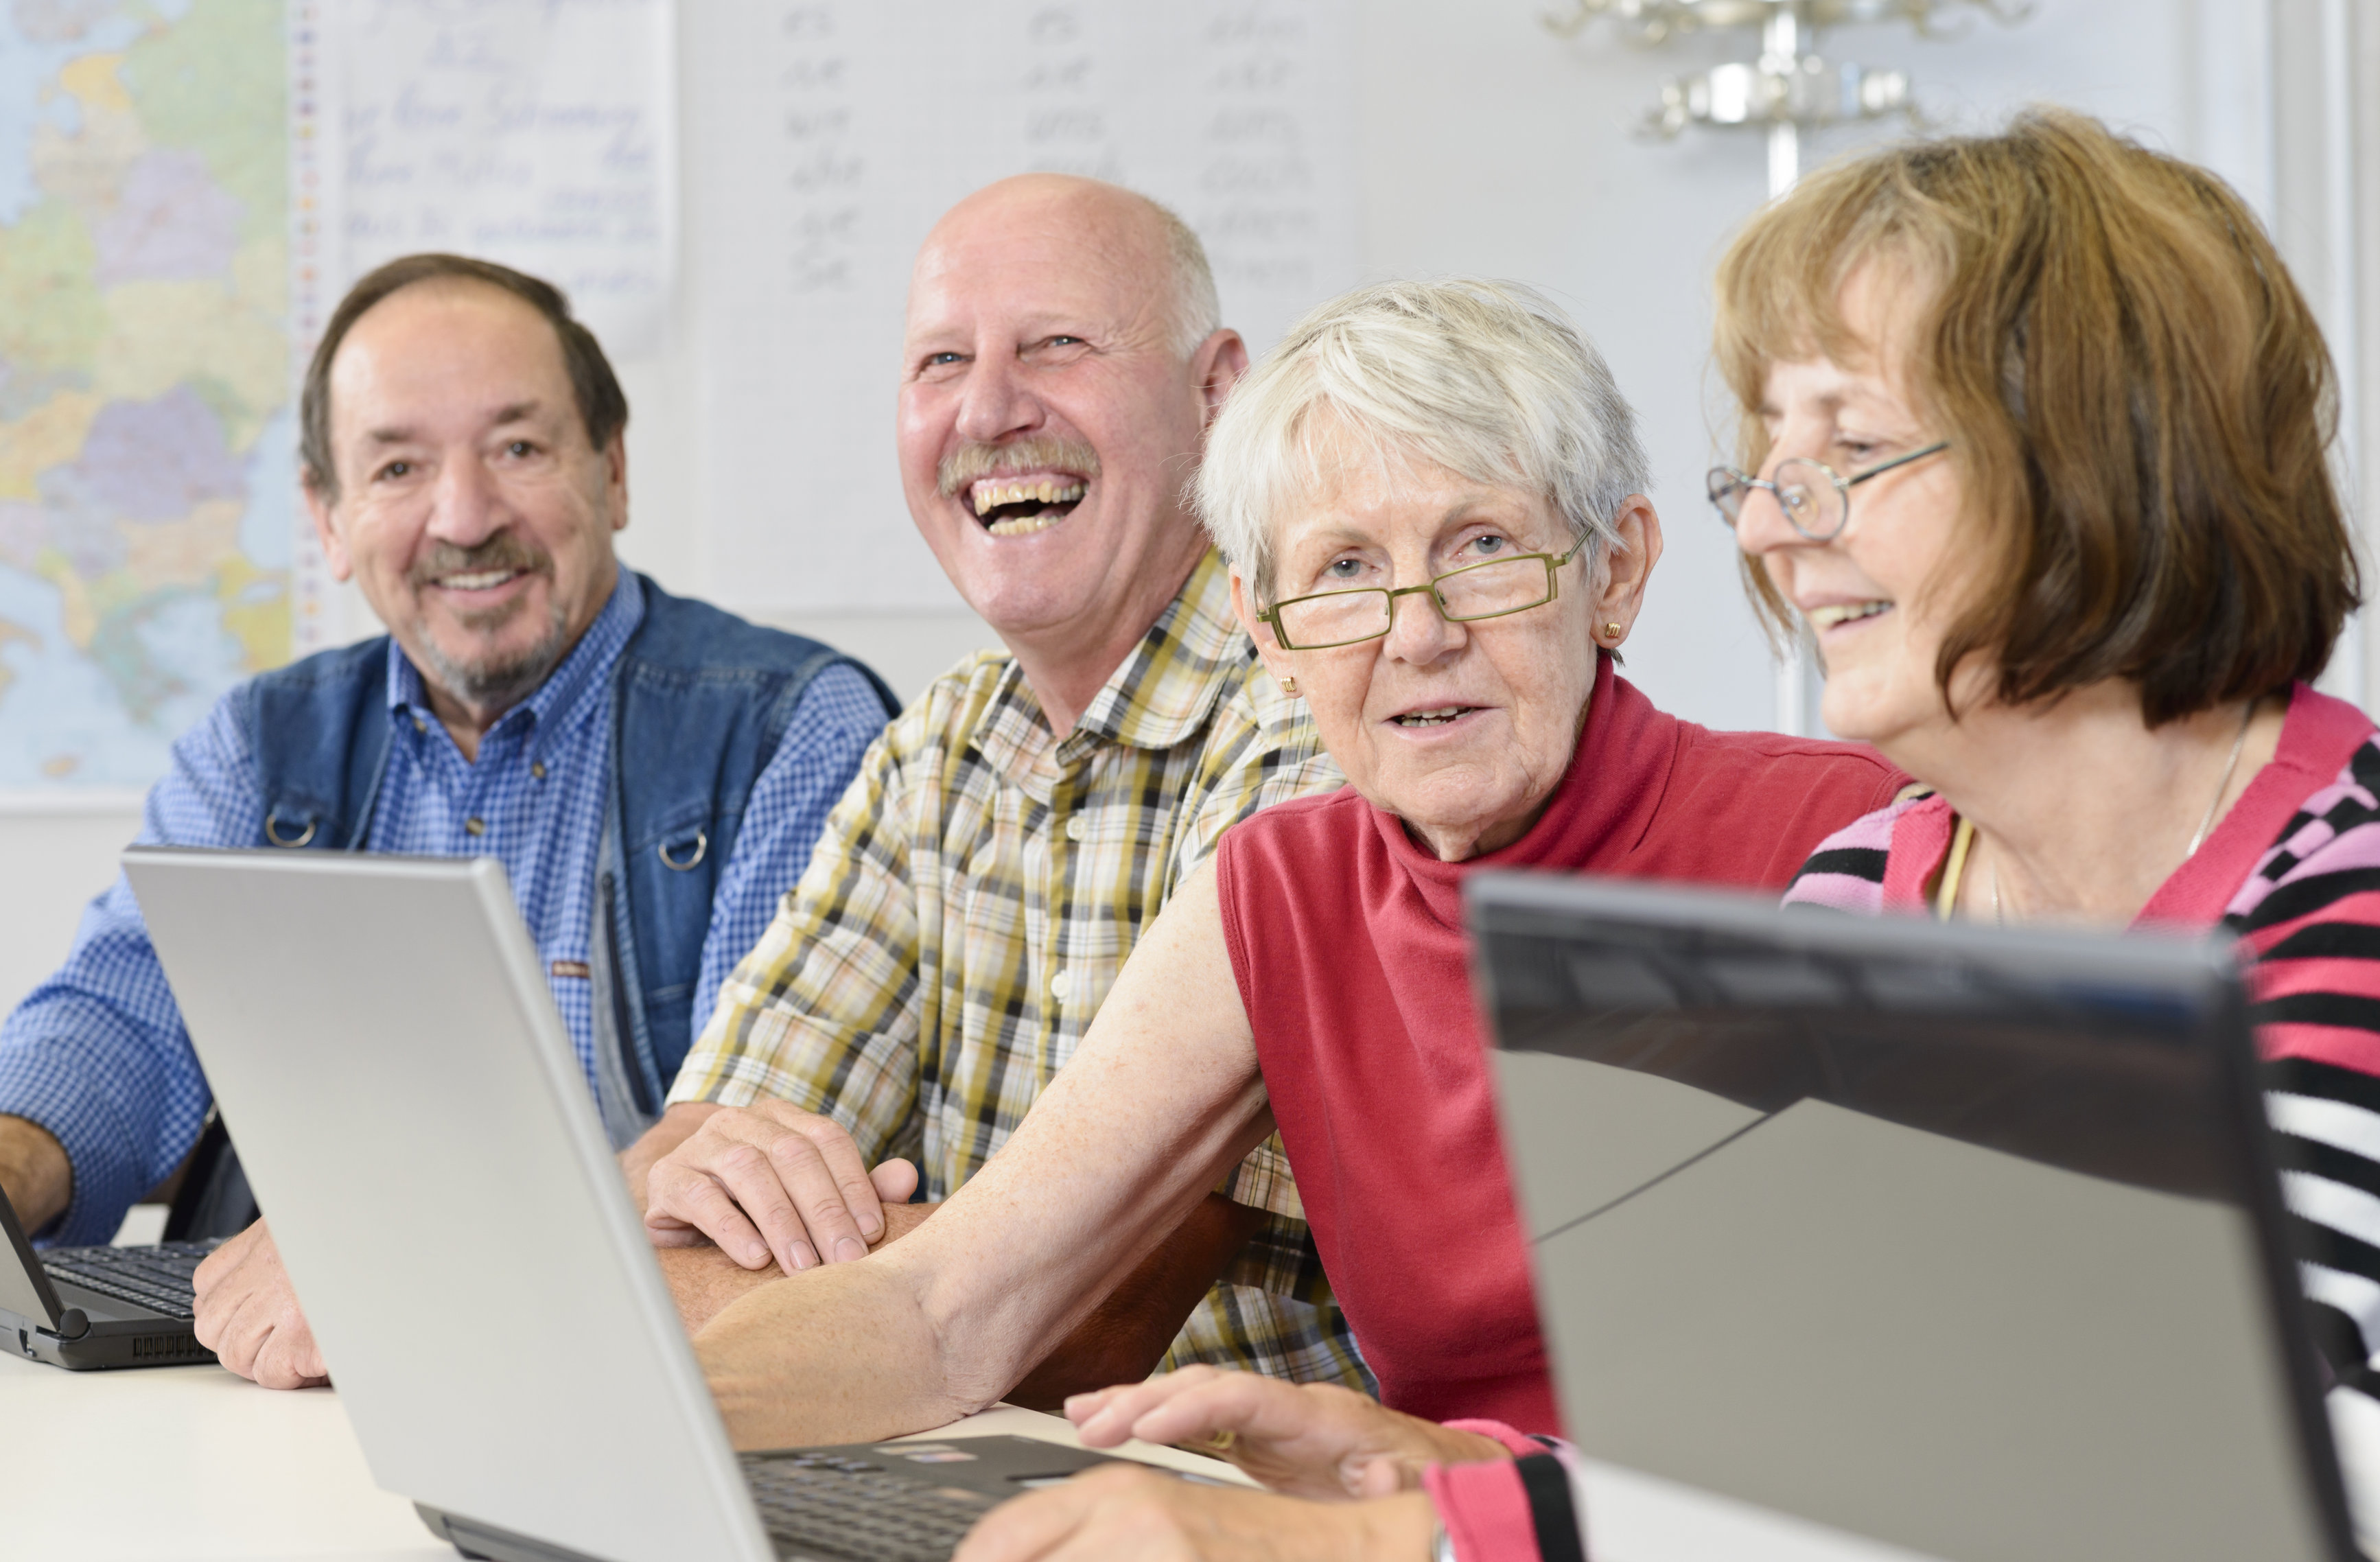 Helping Seniors Learn New Technology | HuffPost